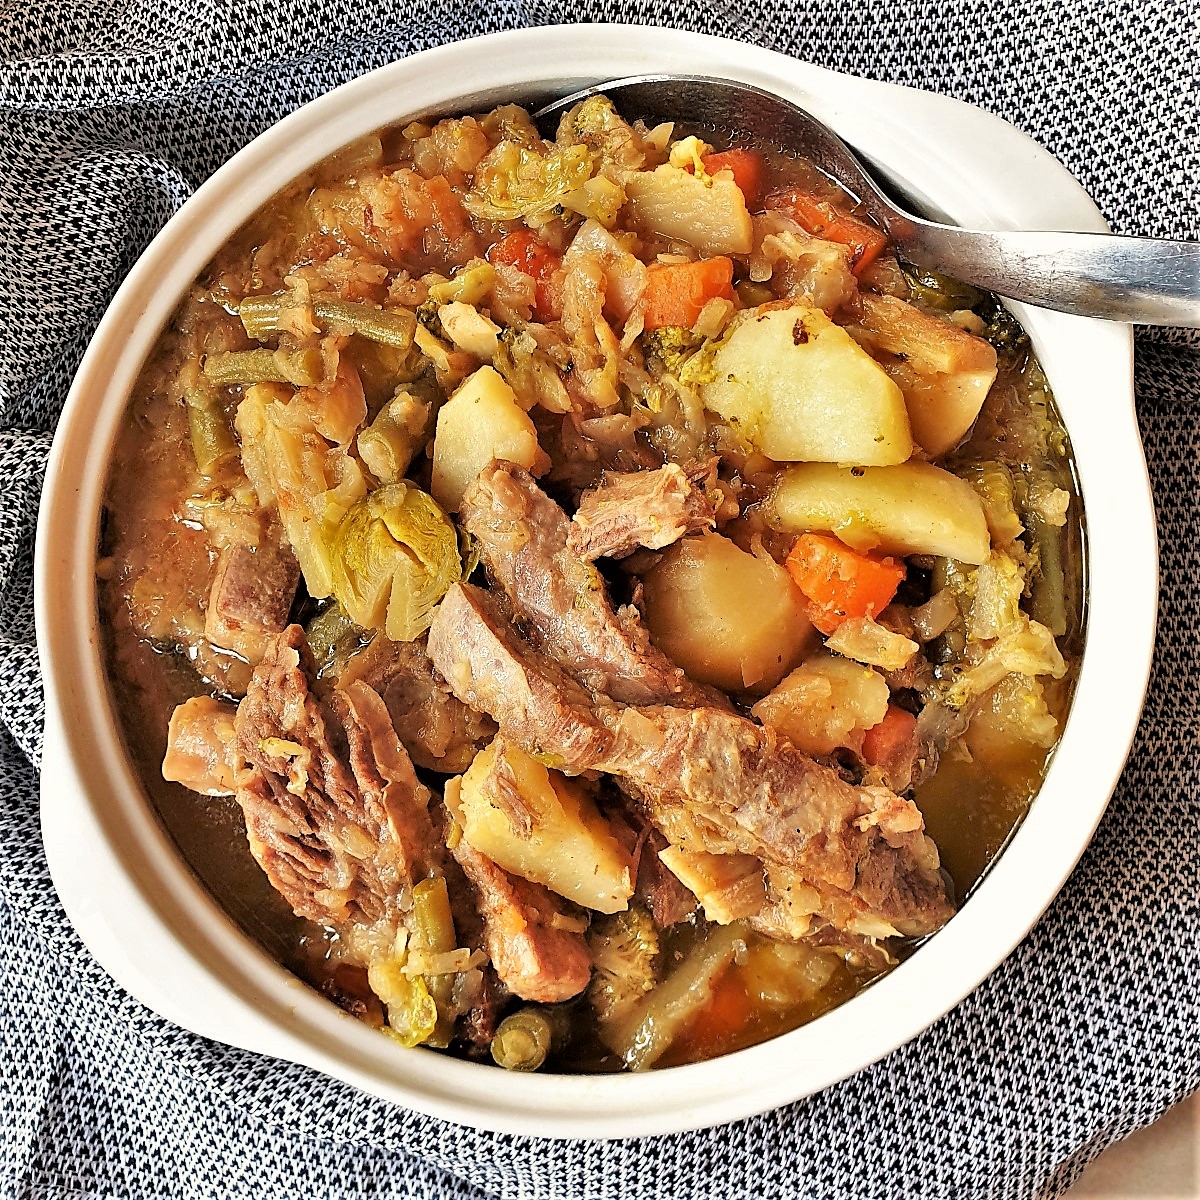 A bowl of lamb stew.